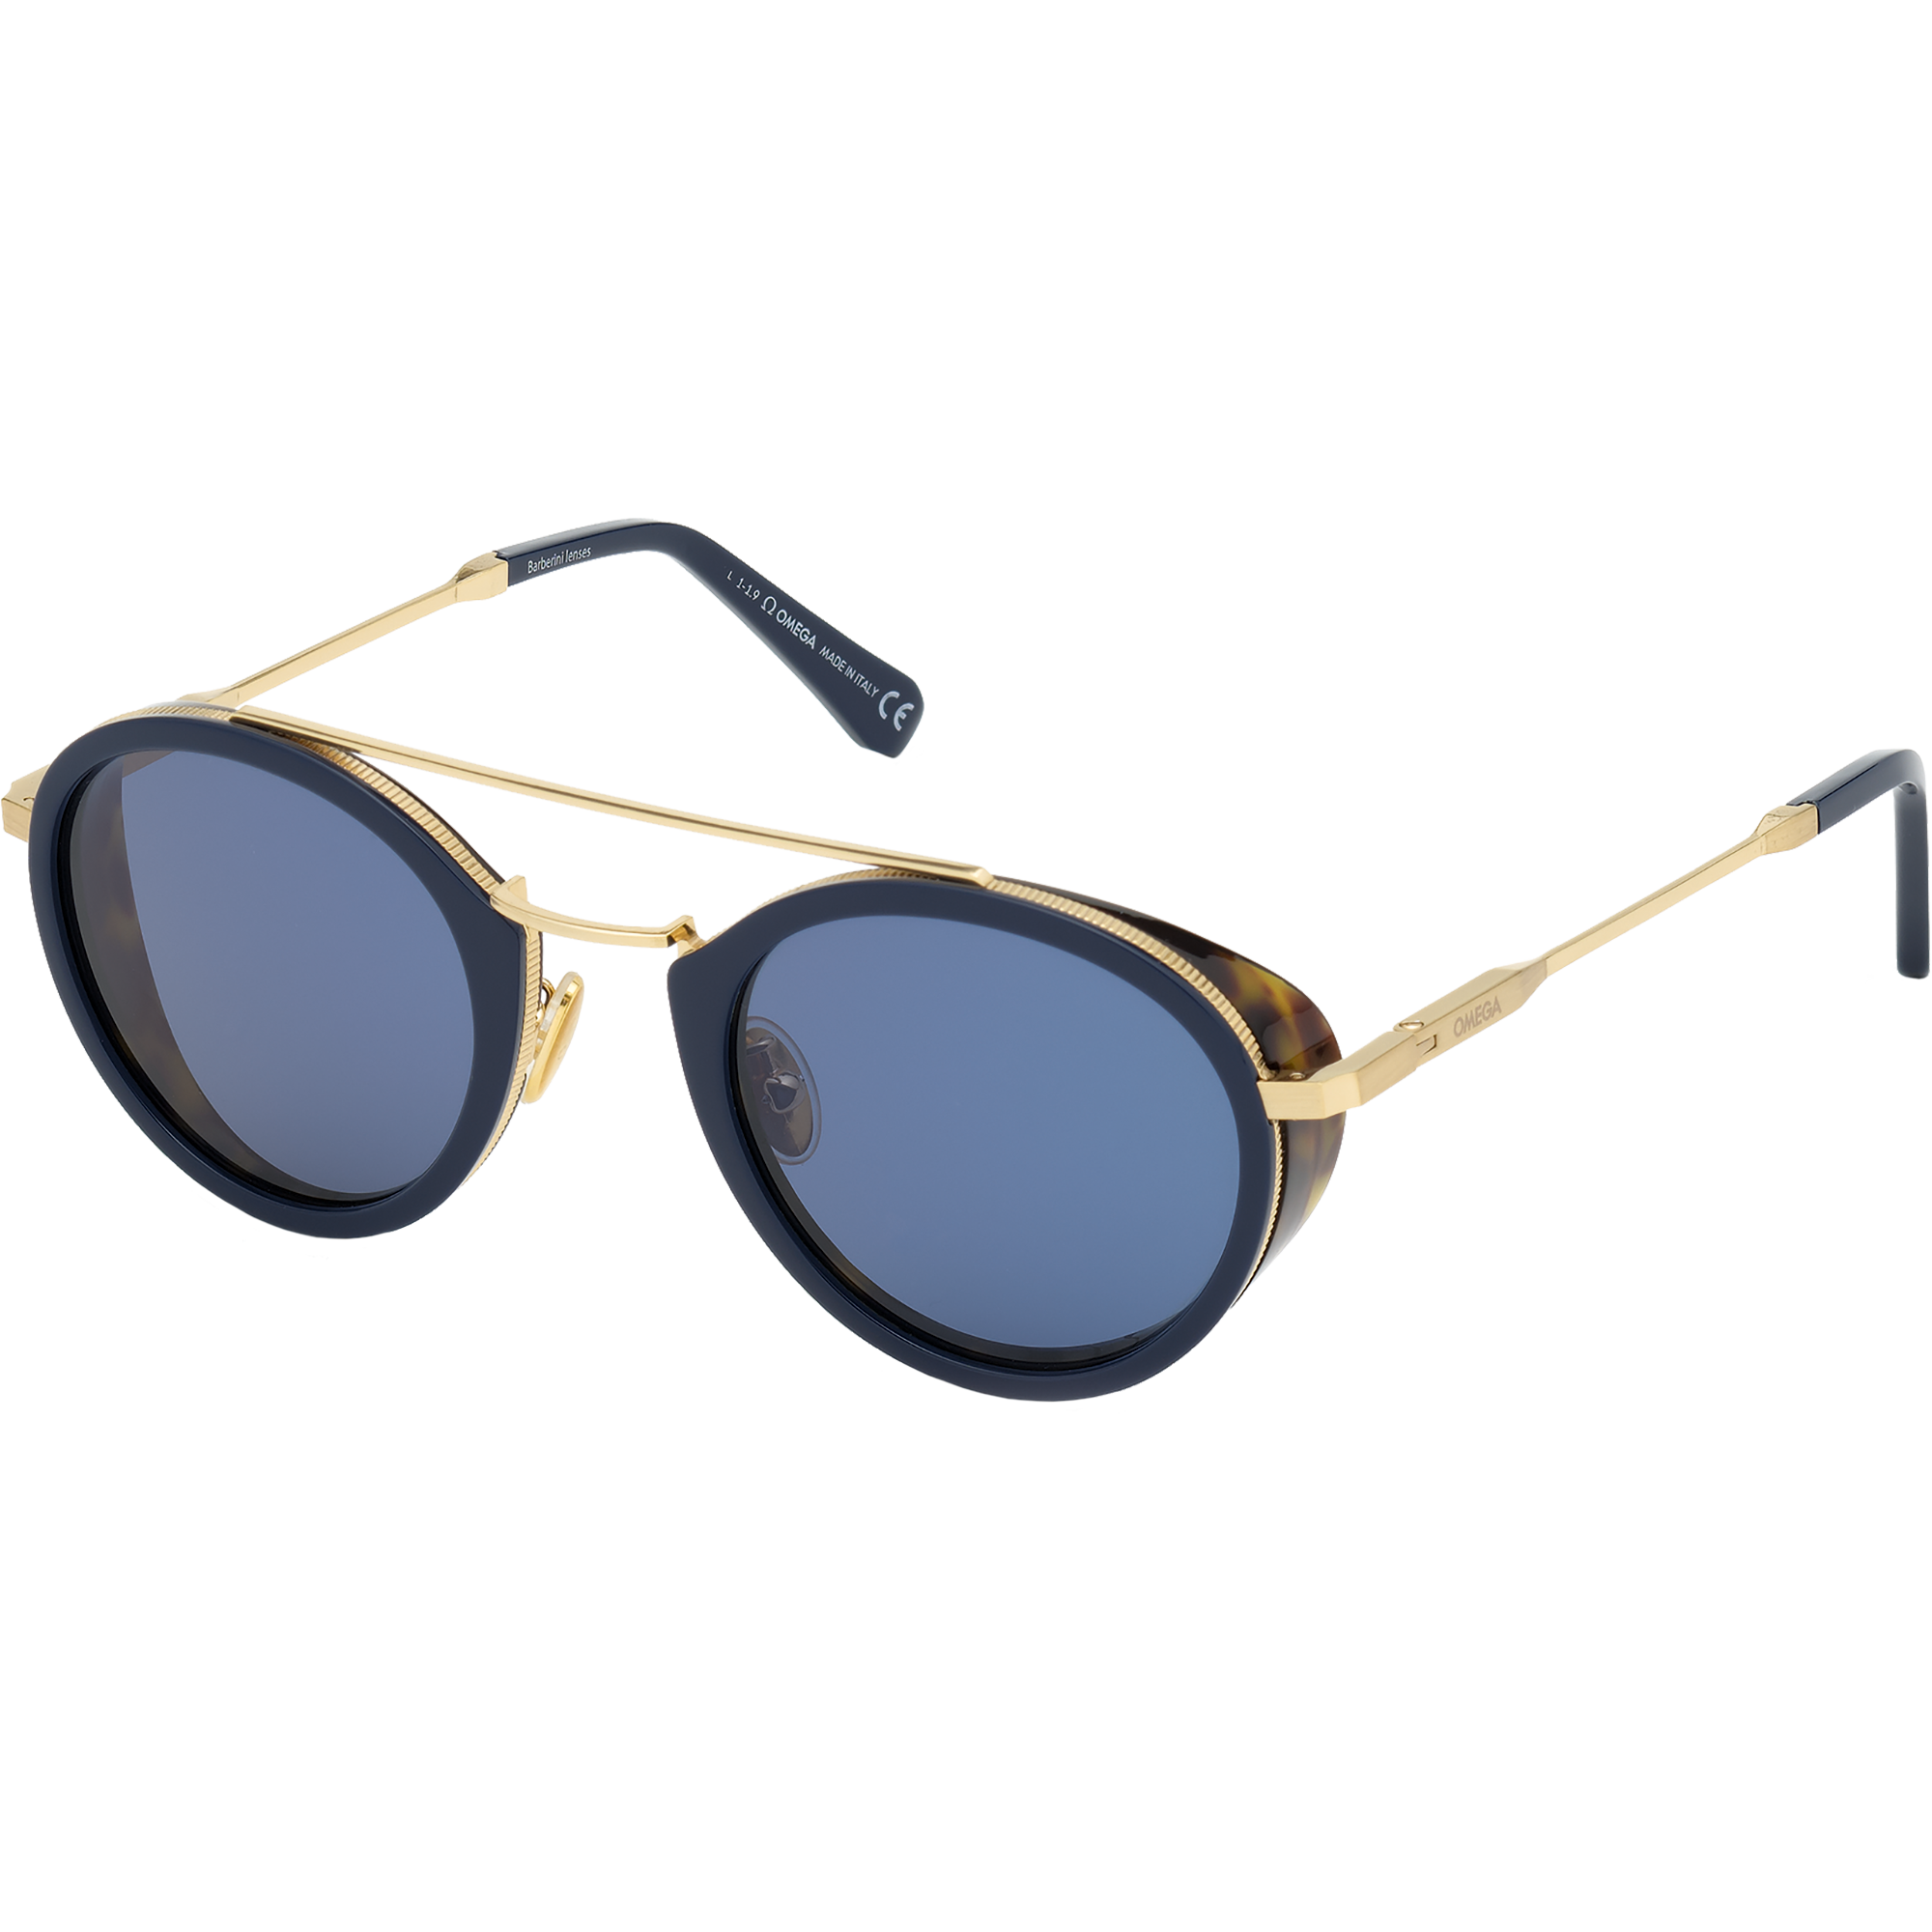 Sunglasses - Round style, Unisex - OM0021-H5290V